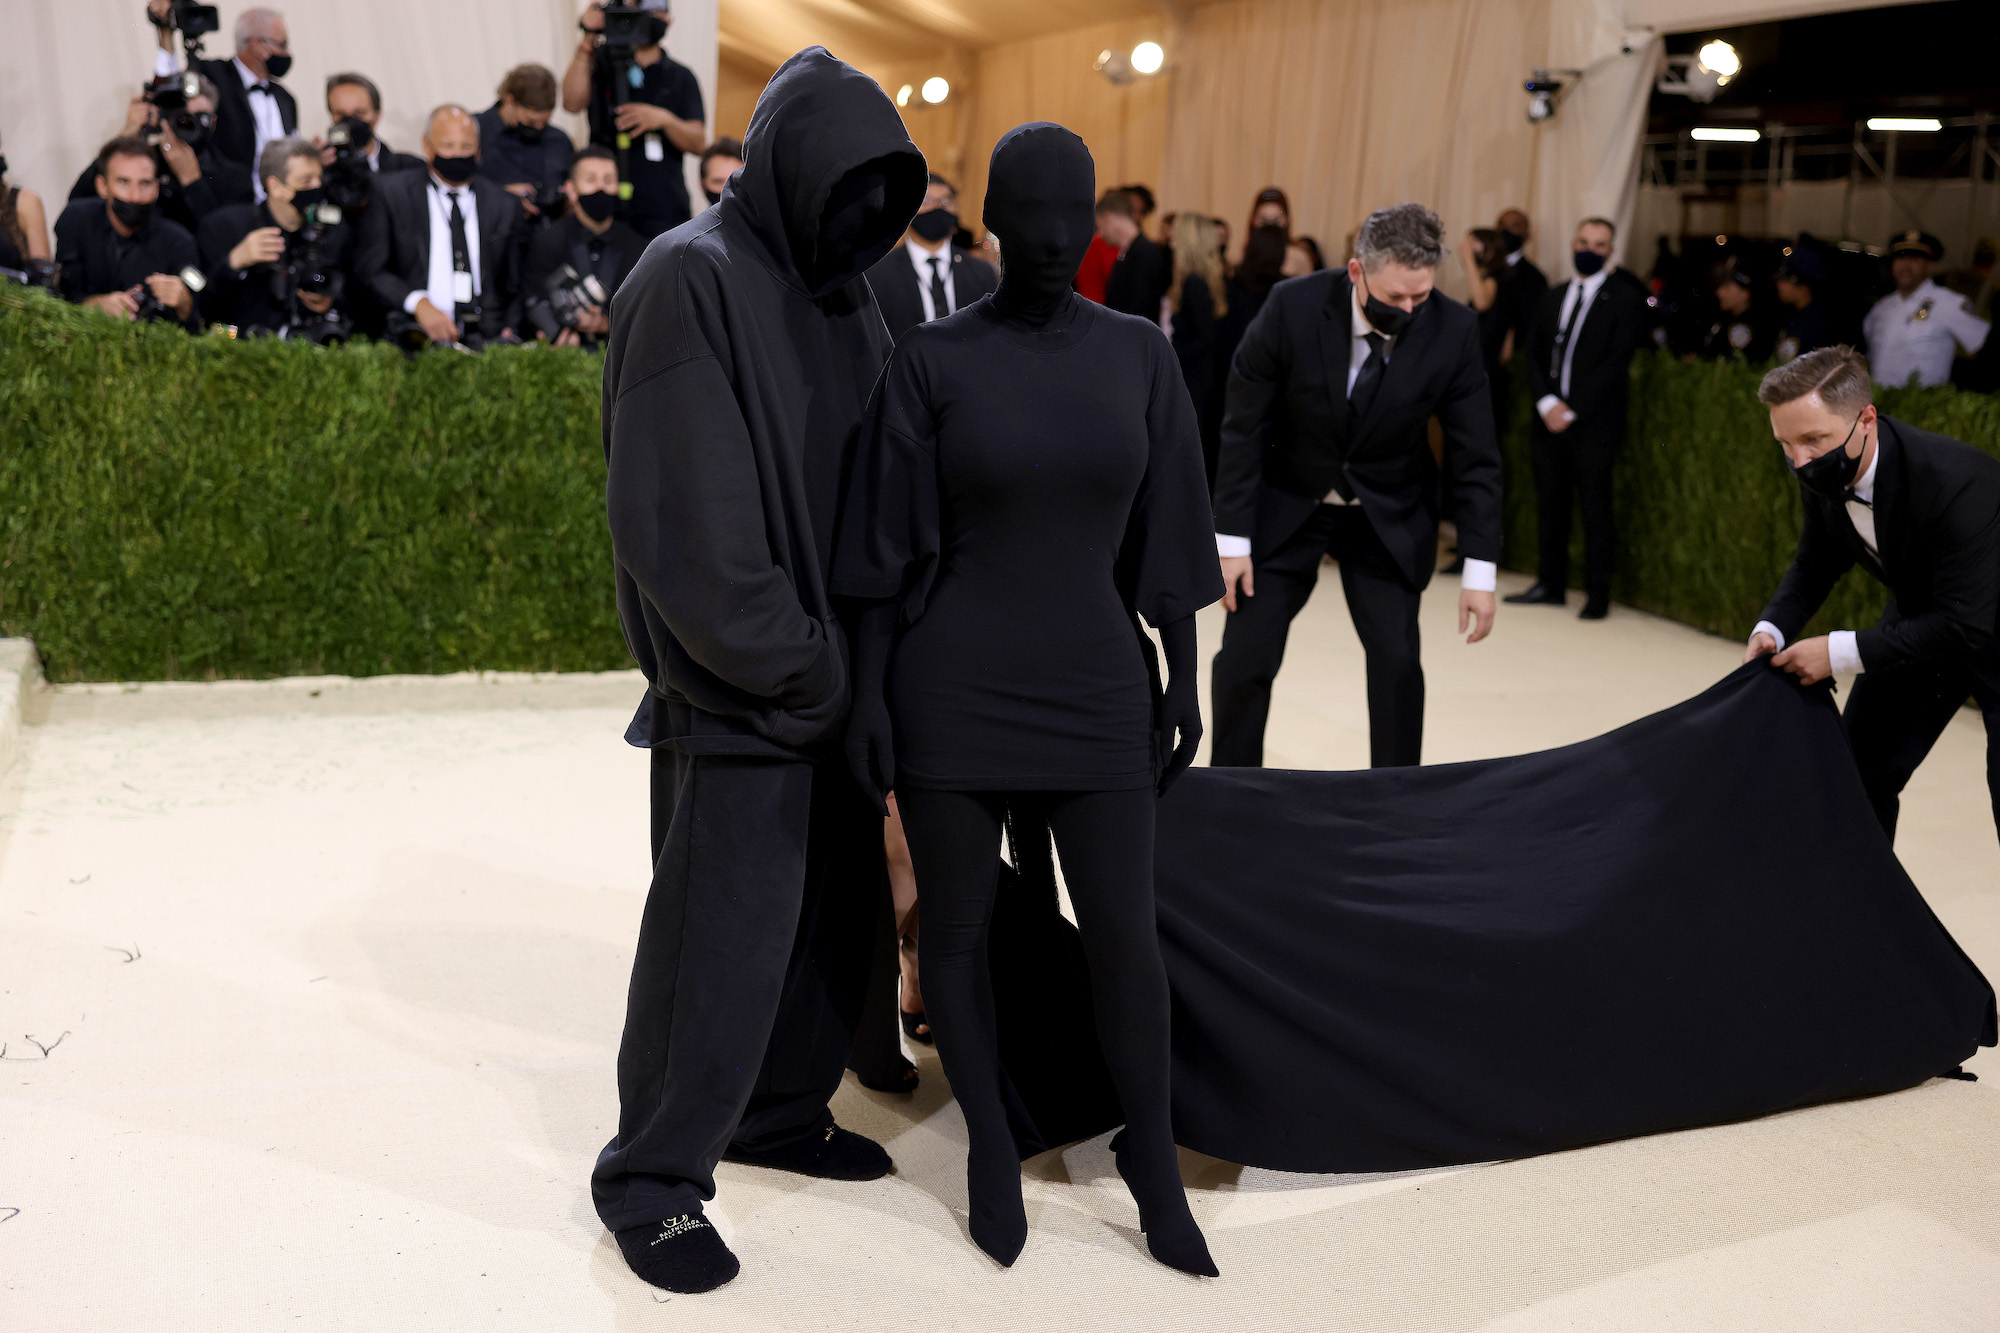 Kim Kardashian West and Demna Gvasalia, the creative director of Balenciaga, posing on the red carpet at the 2021 Met Gala 